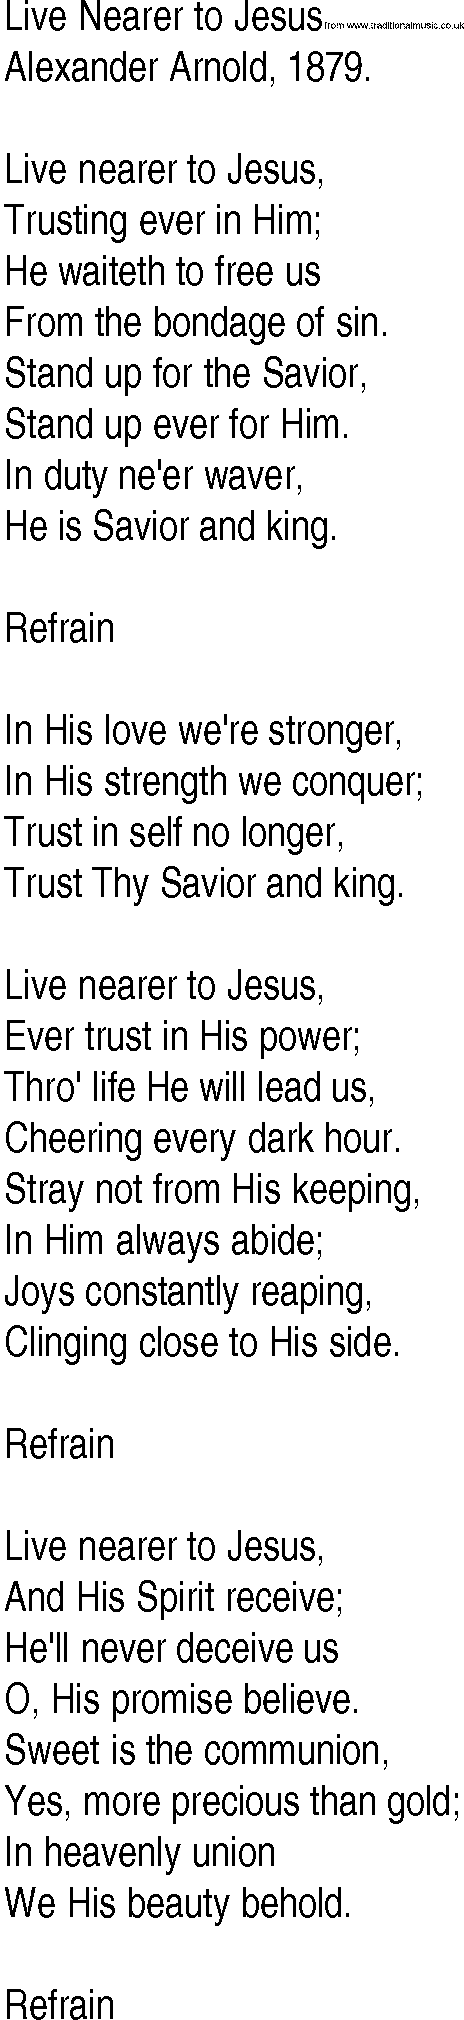 Hymn and Gospel Song: Live Nearer to Jesus by Alexander Arnold lyrics